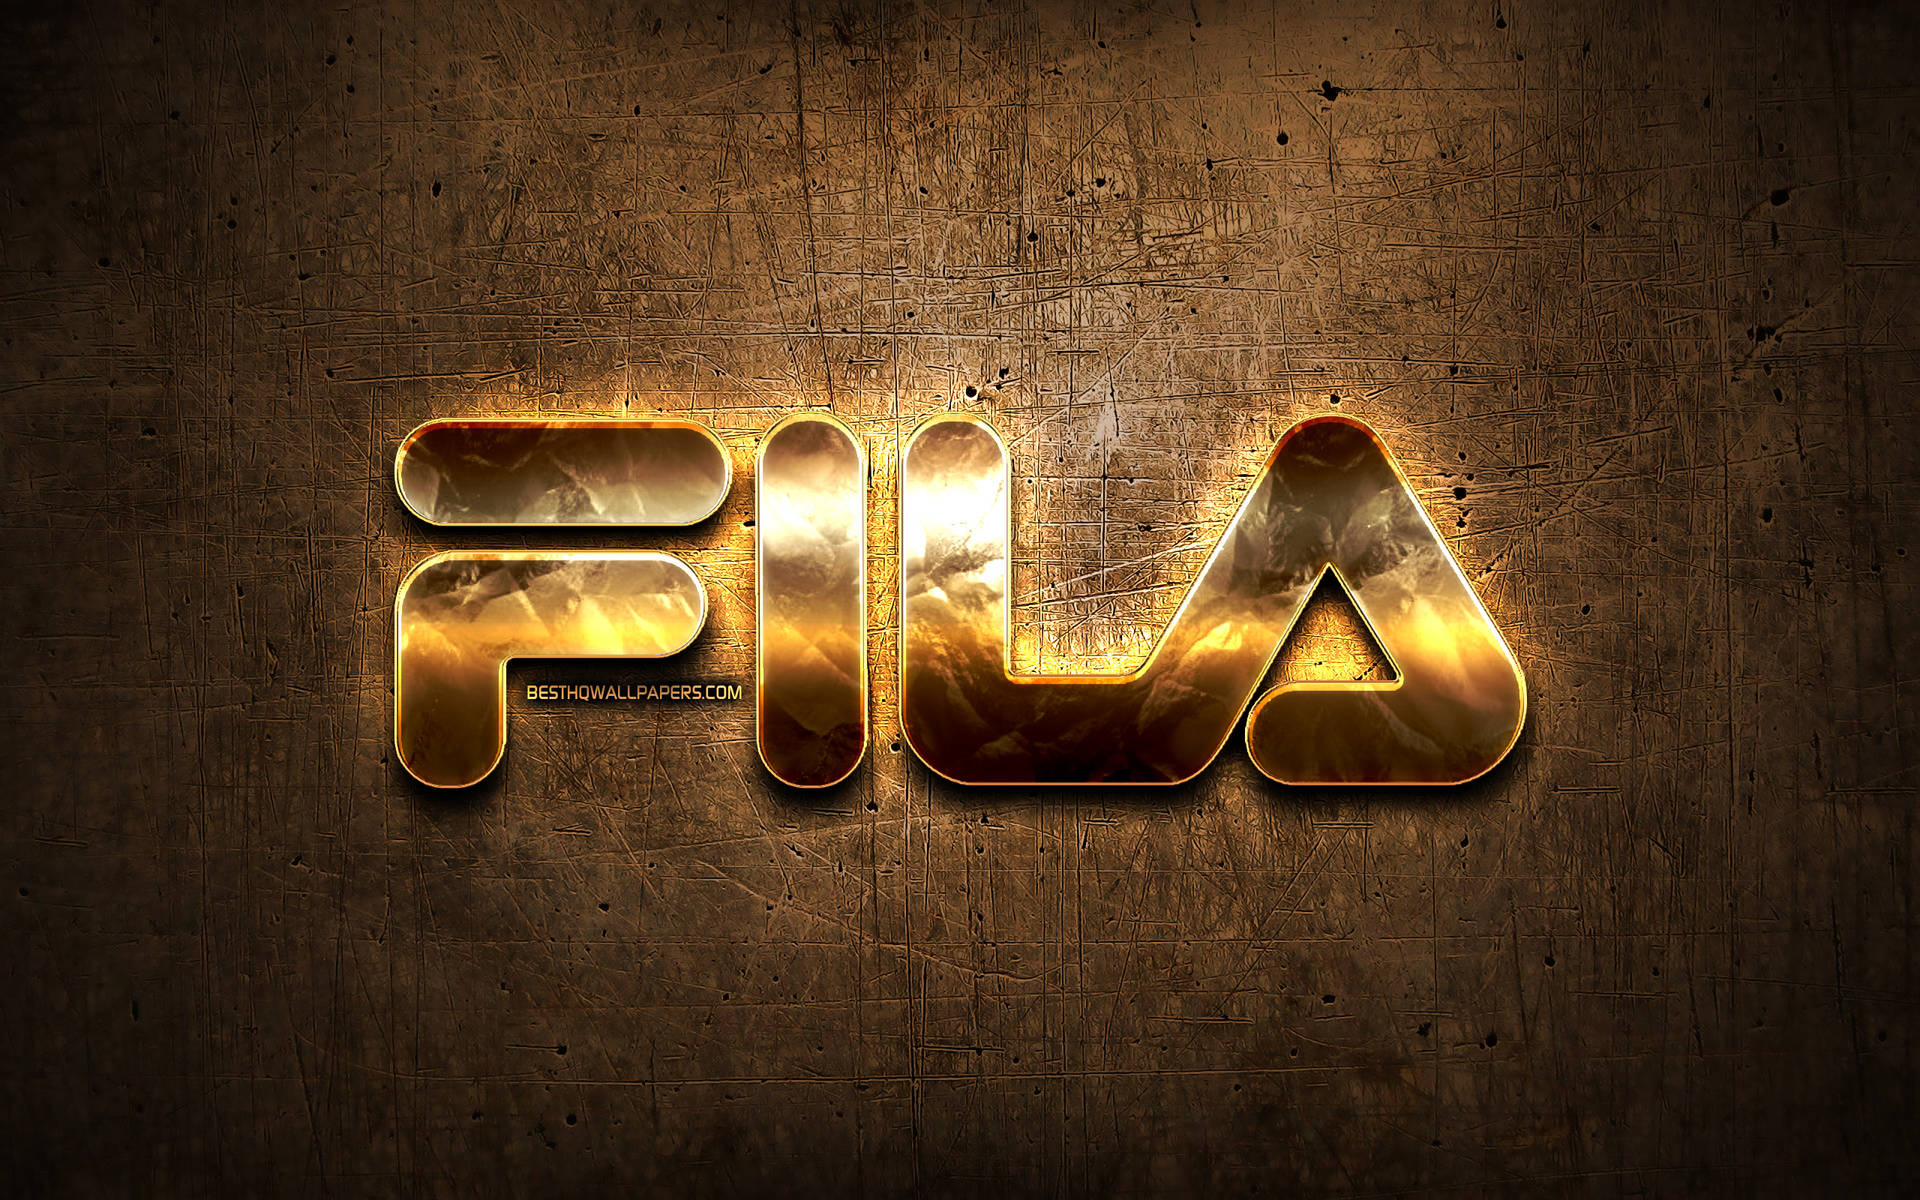 Fila orange logo, , orange neon lights, creative, orange abstract  background, Fila logo, brands, Fila HD wallpaper